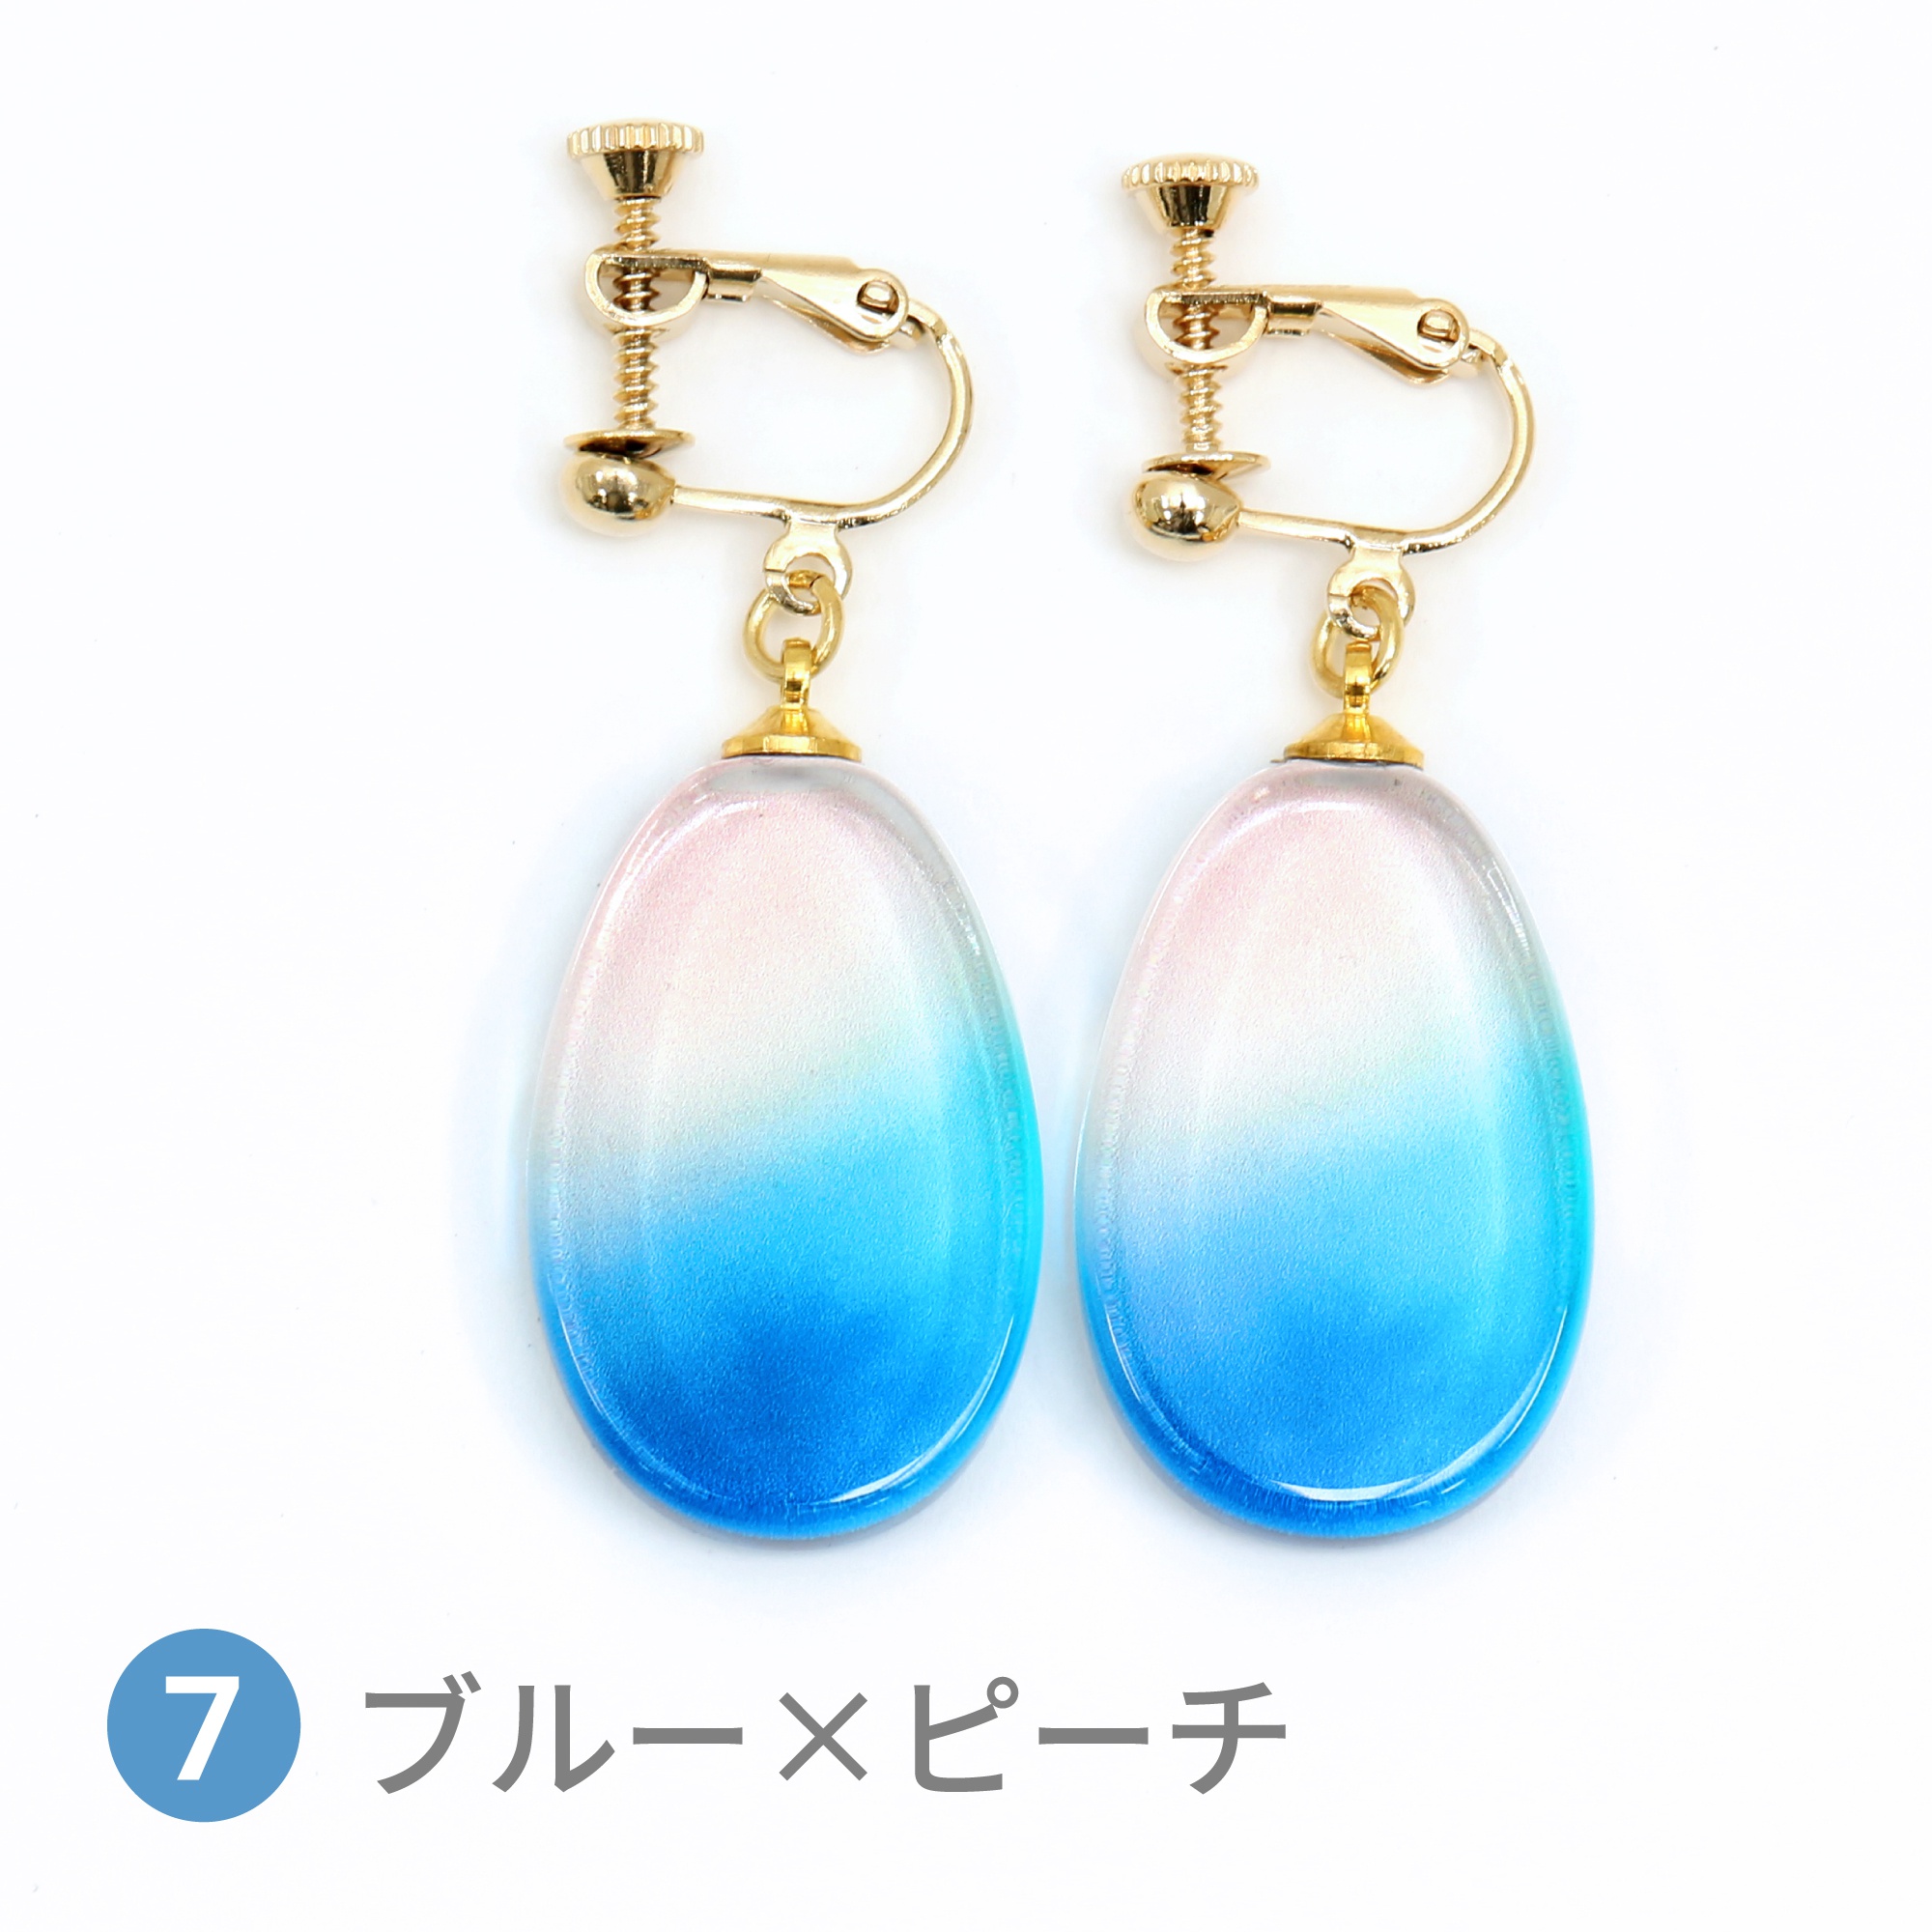 Glass accessories Earring AURORA blue &peach drop shape